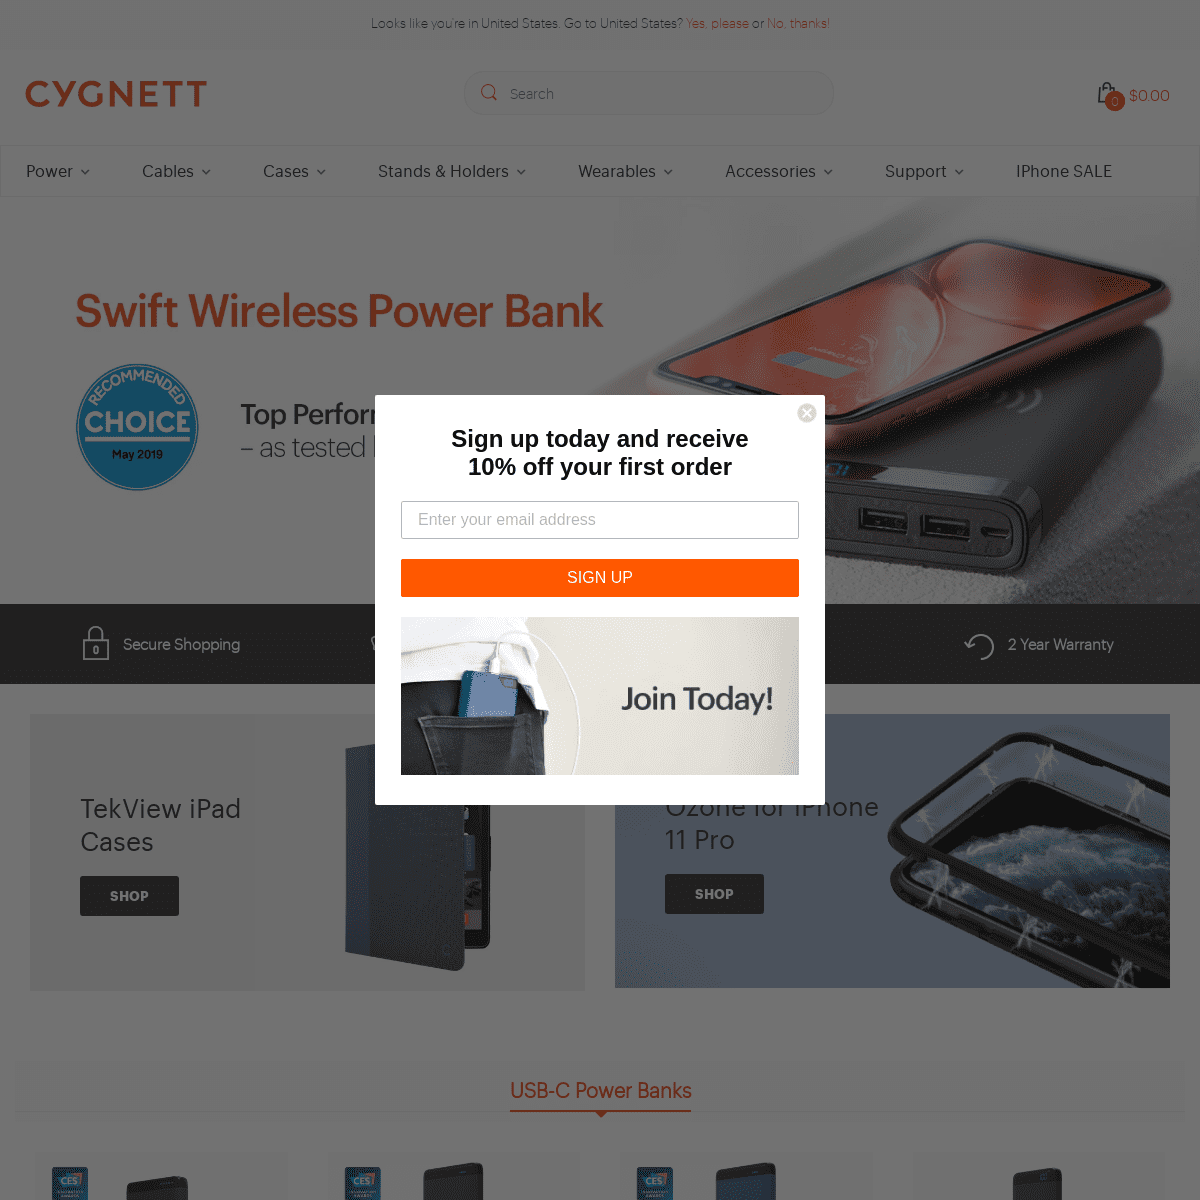 A complete backup of cygnett.com